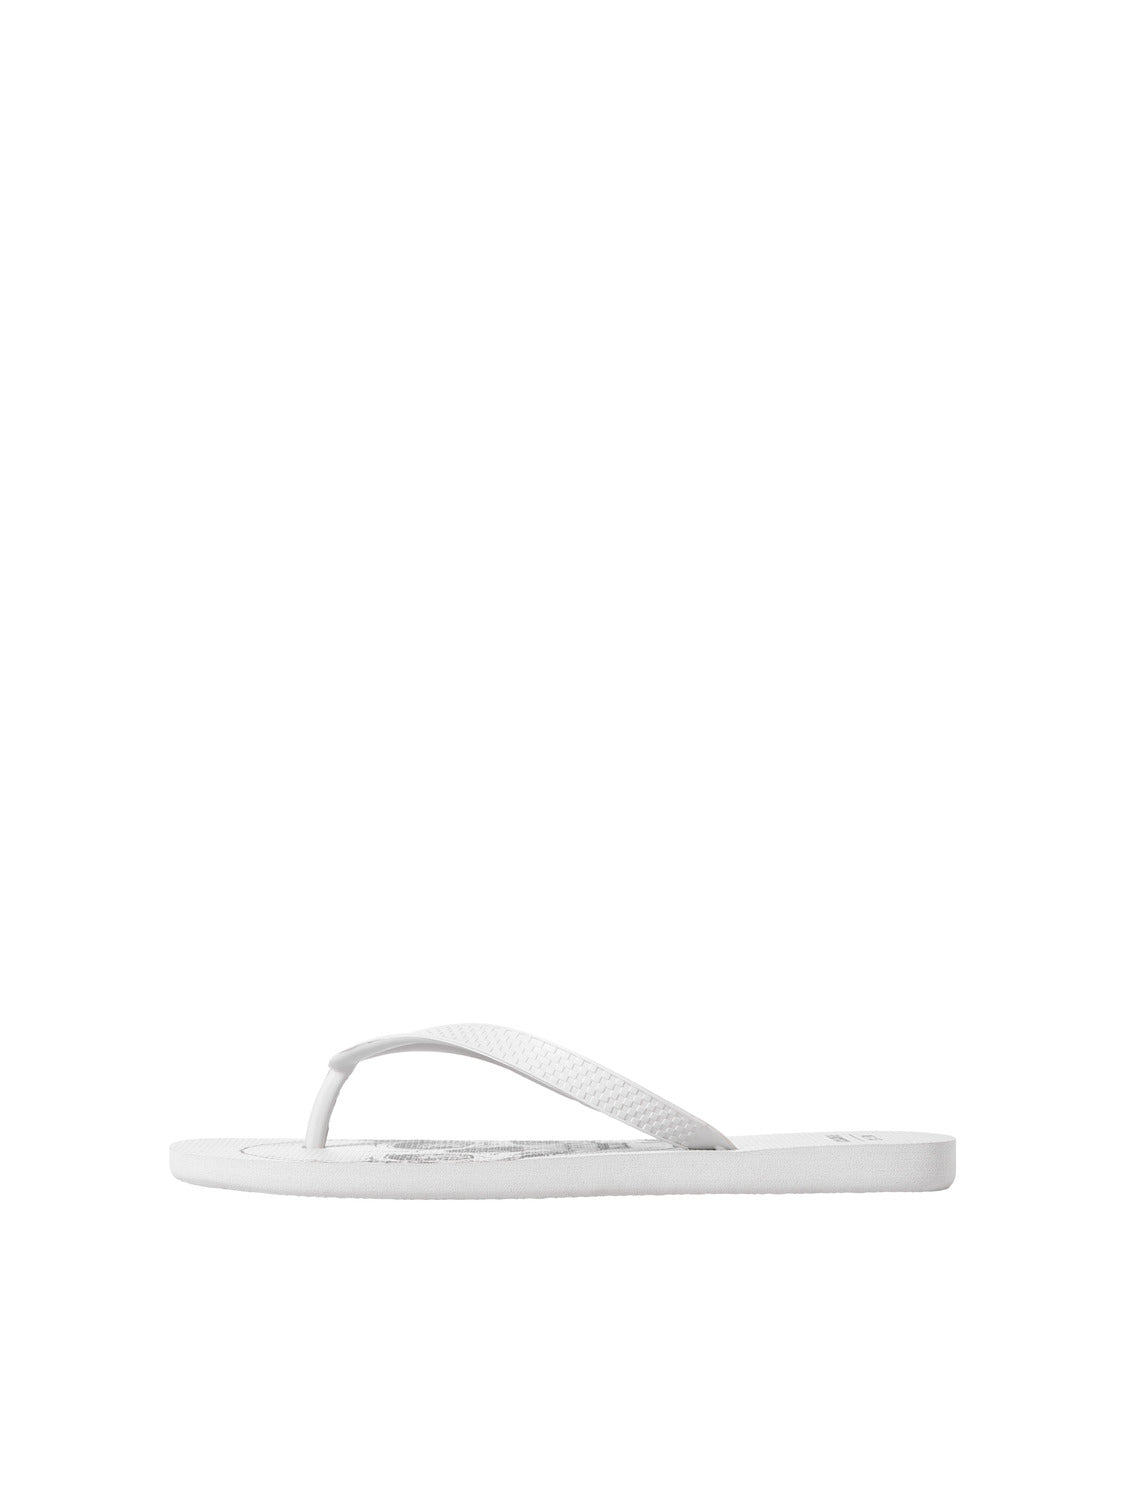 JFWAUTHENTIC Flip Flop - Bright White